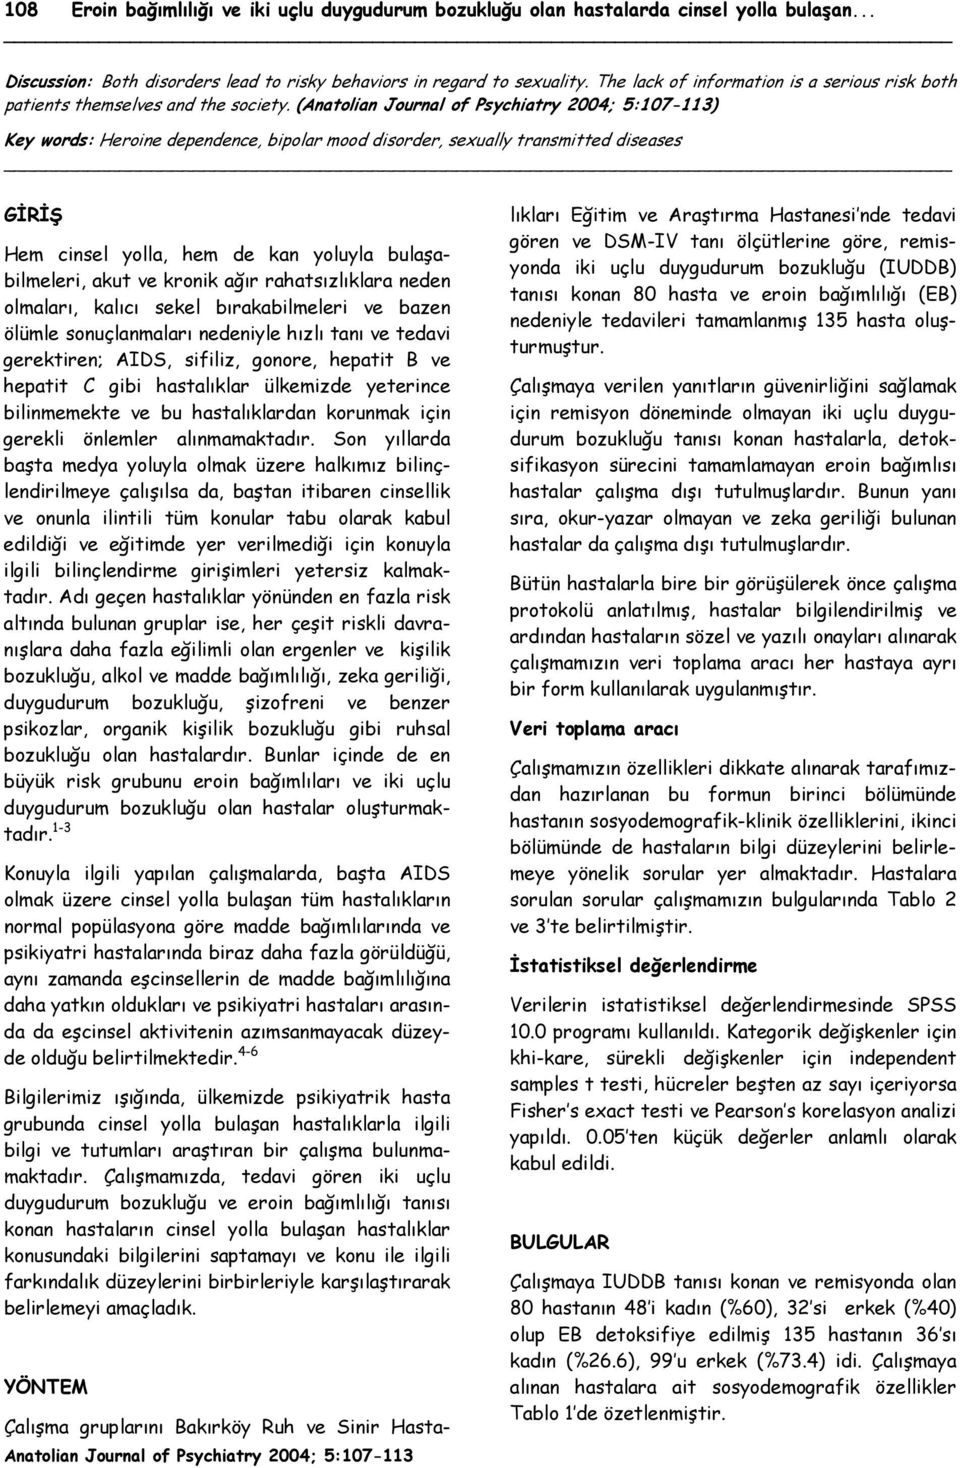 (Anatolian Journal of Psychiatry 2004; 5:107-113) Key words: Heroine dependence, bipolar mood disorder, sexually transmitted diseases GİRİŞ Hem cinsel yolla, hem de kan yoluyla bulaşabilmeleri, akut